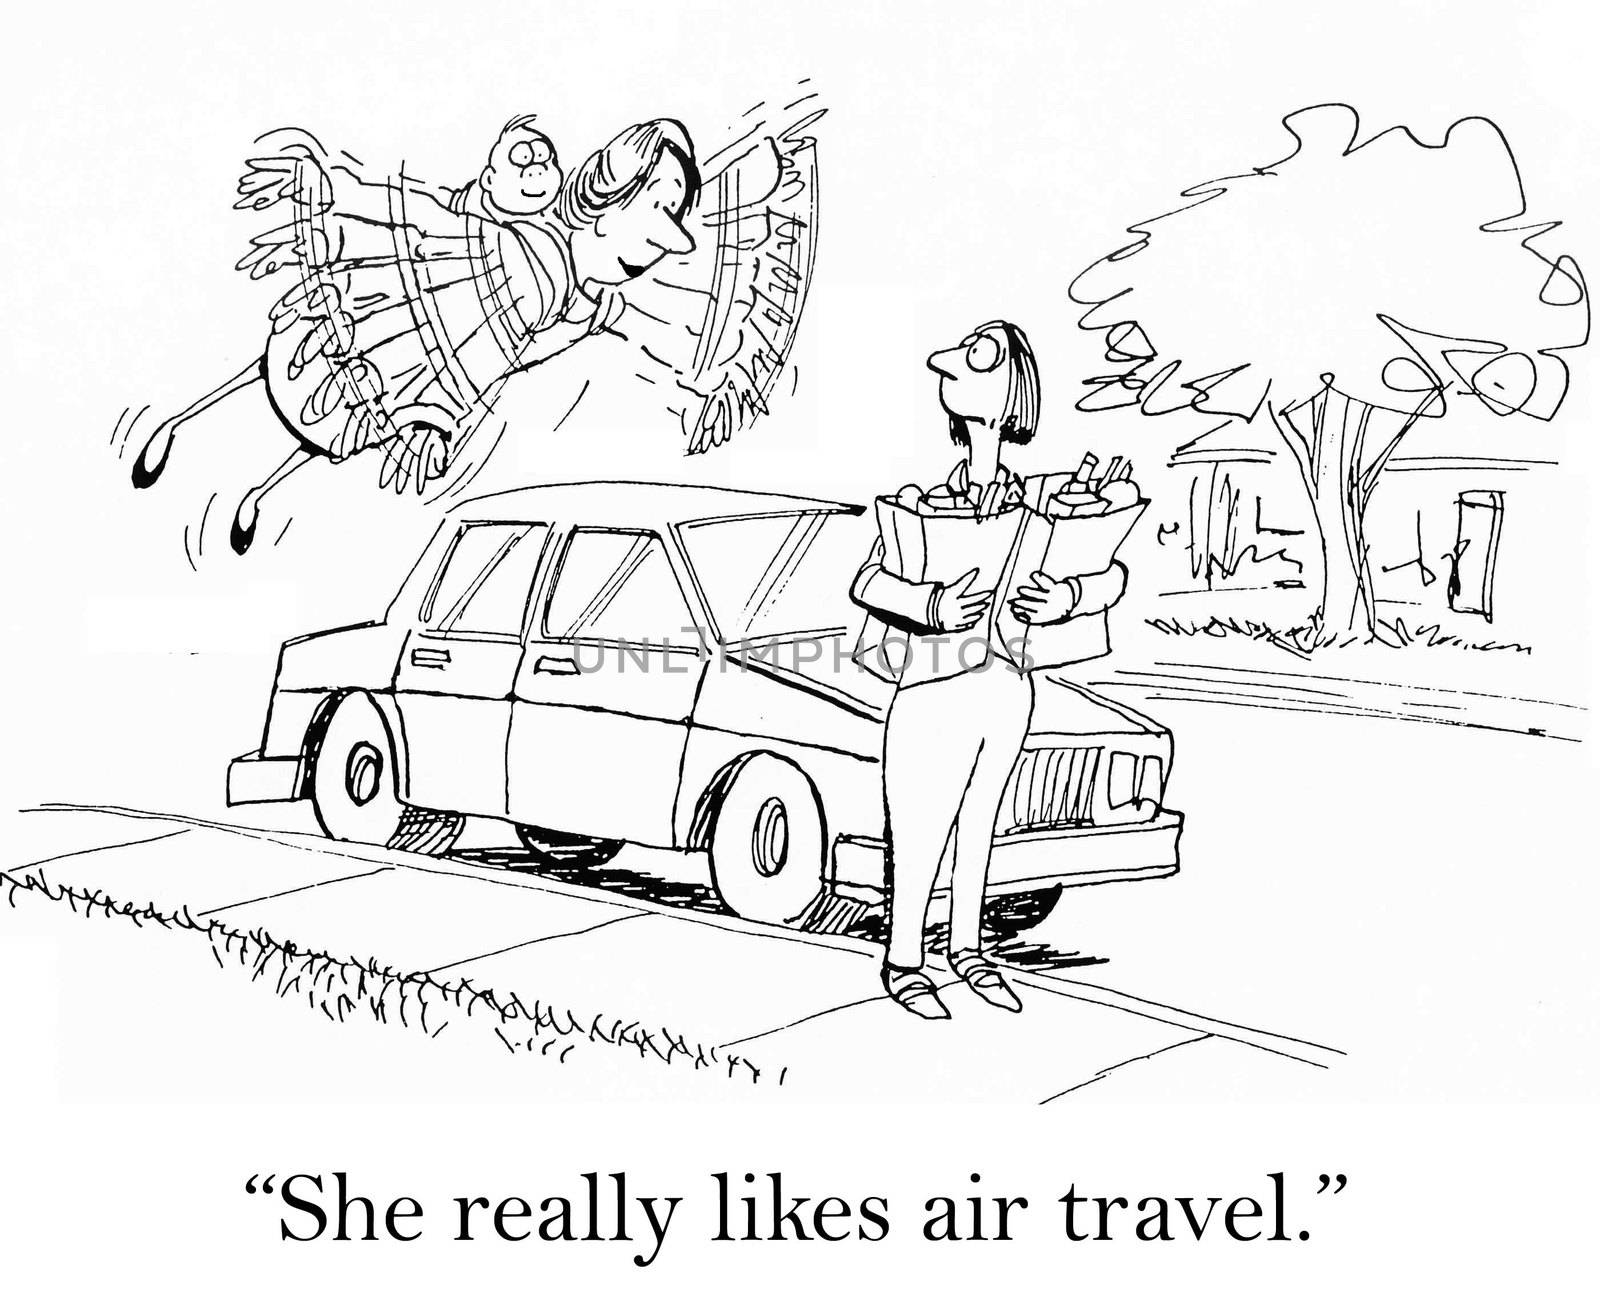 "She really likes air travel."